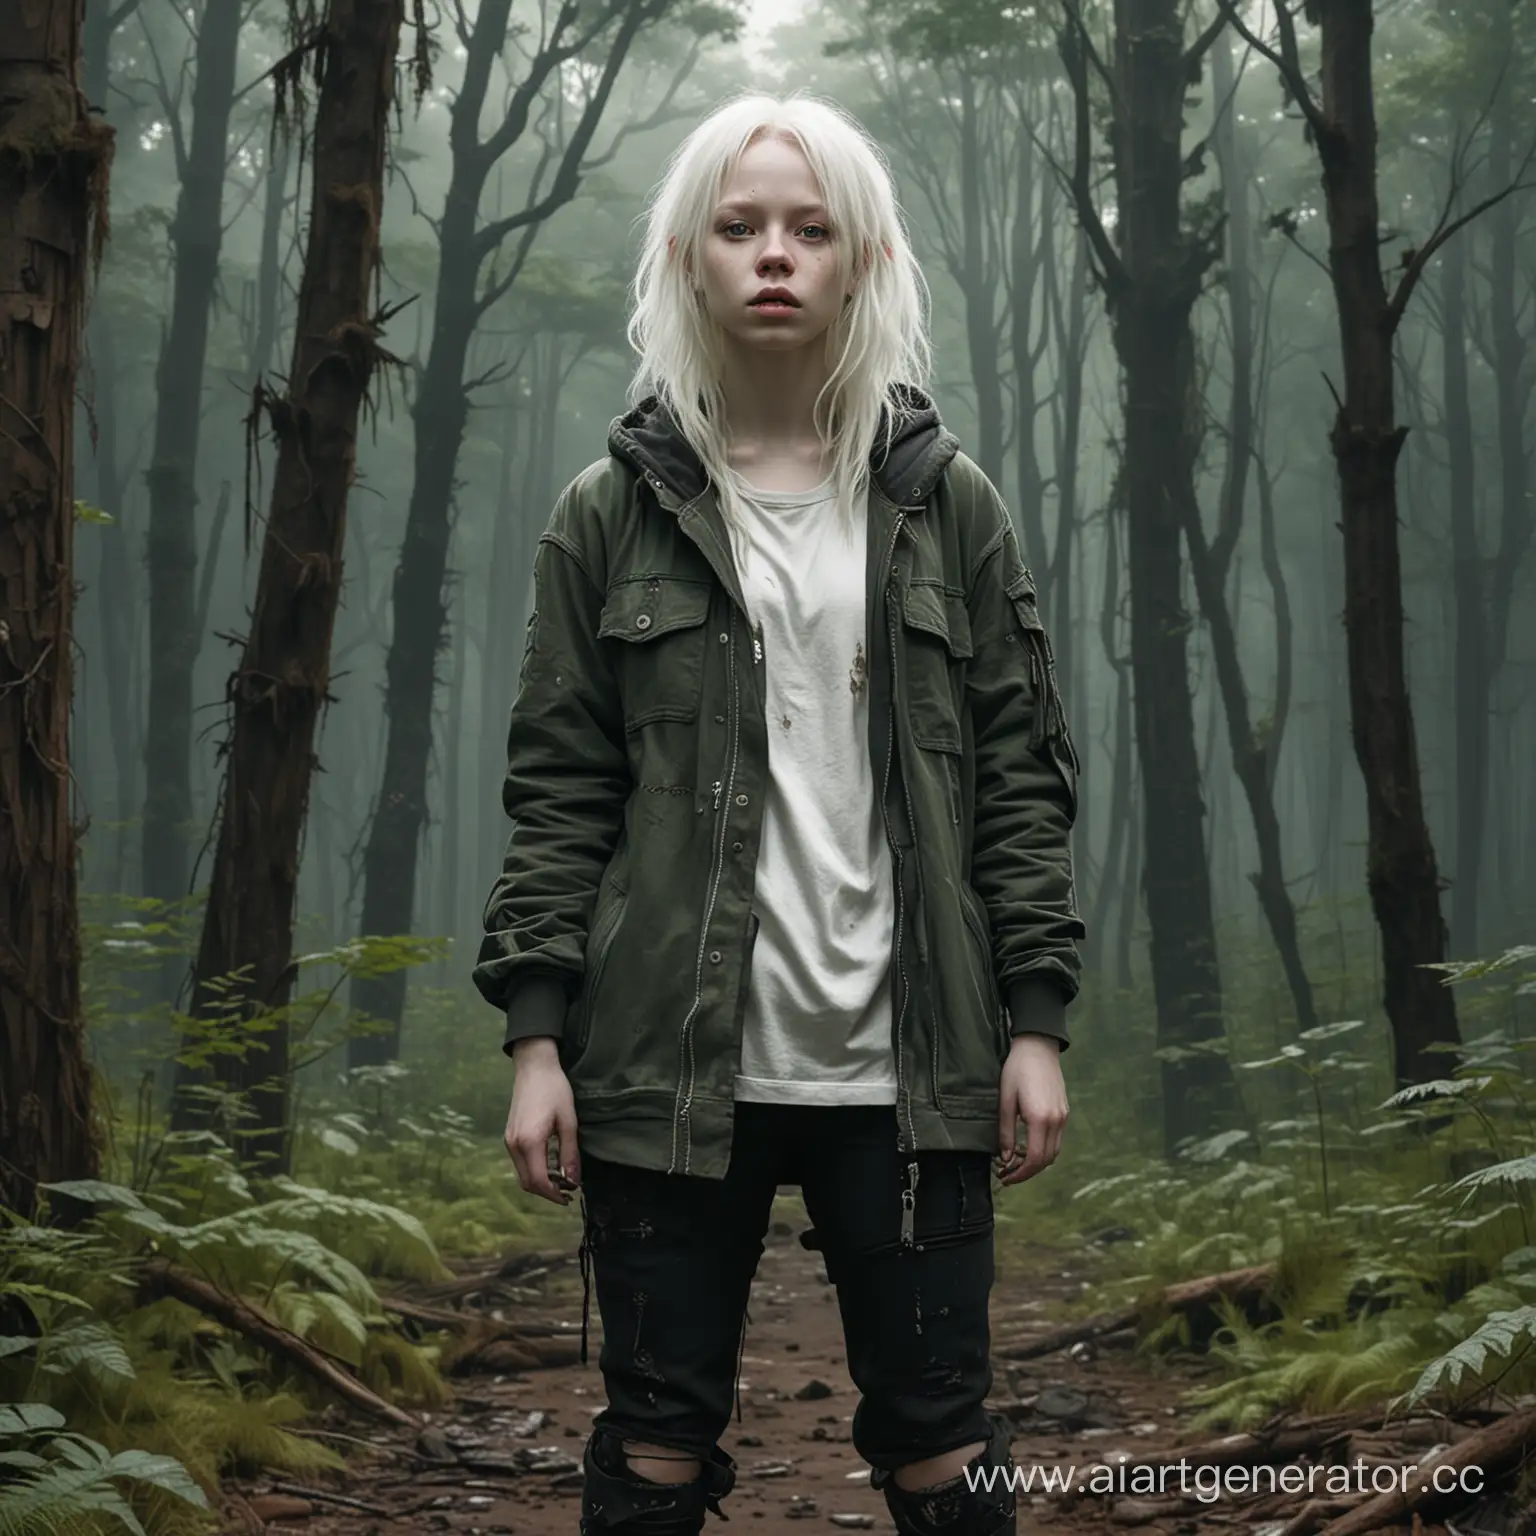 Albino-Girl-in-PostApocalyptic-Forest-Dark-Attire-Amidst-Greenery